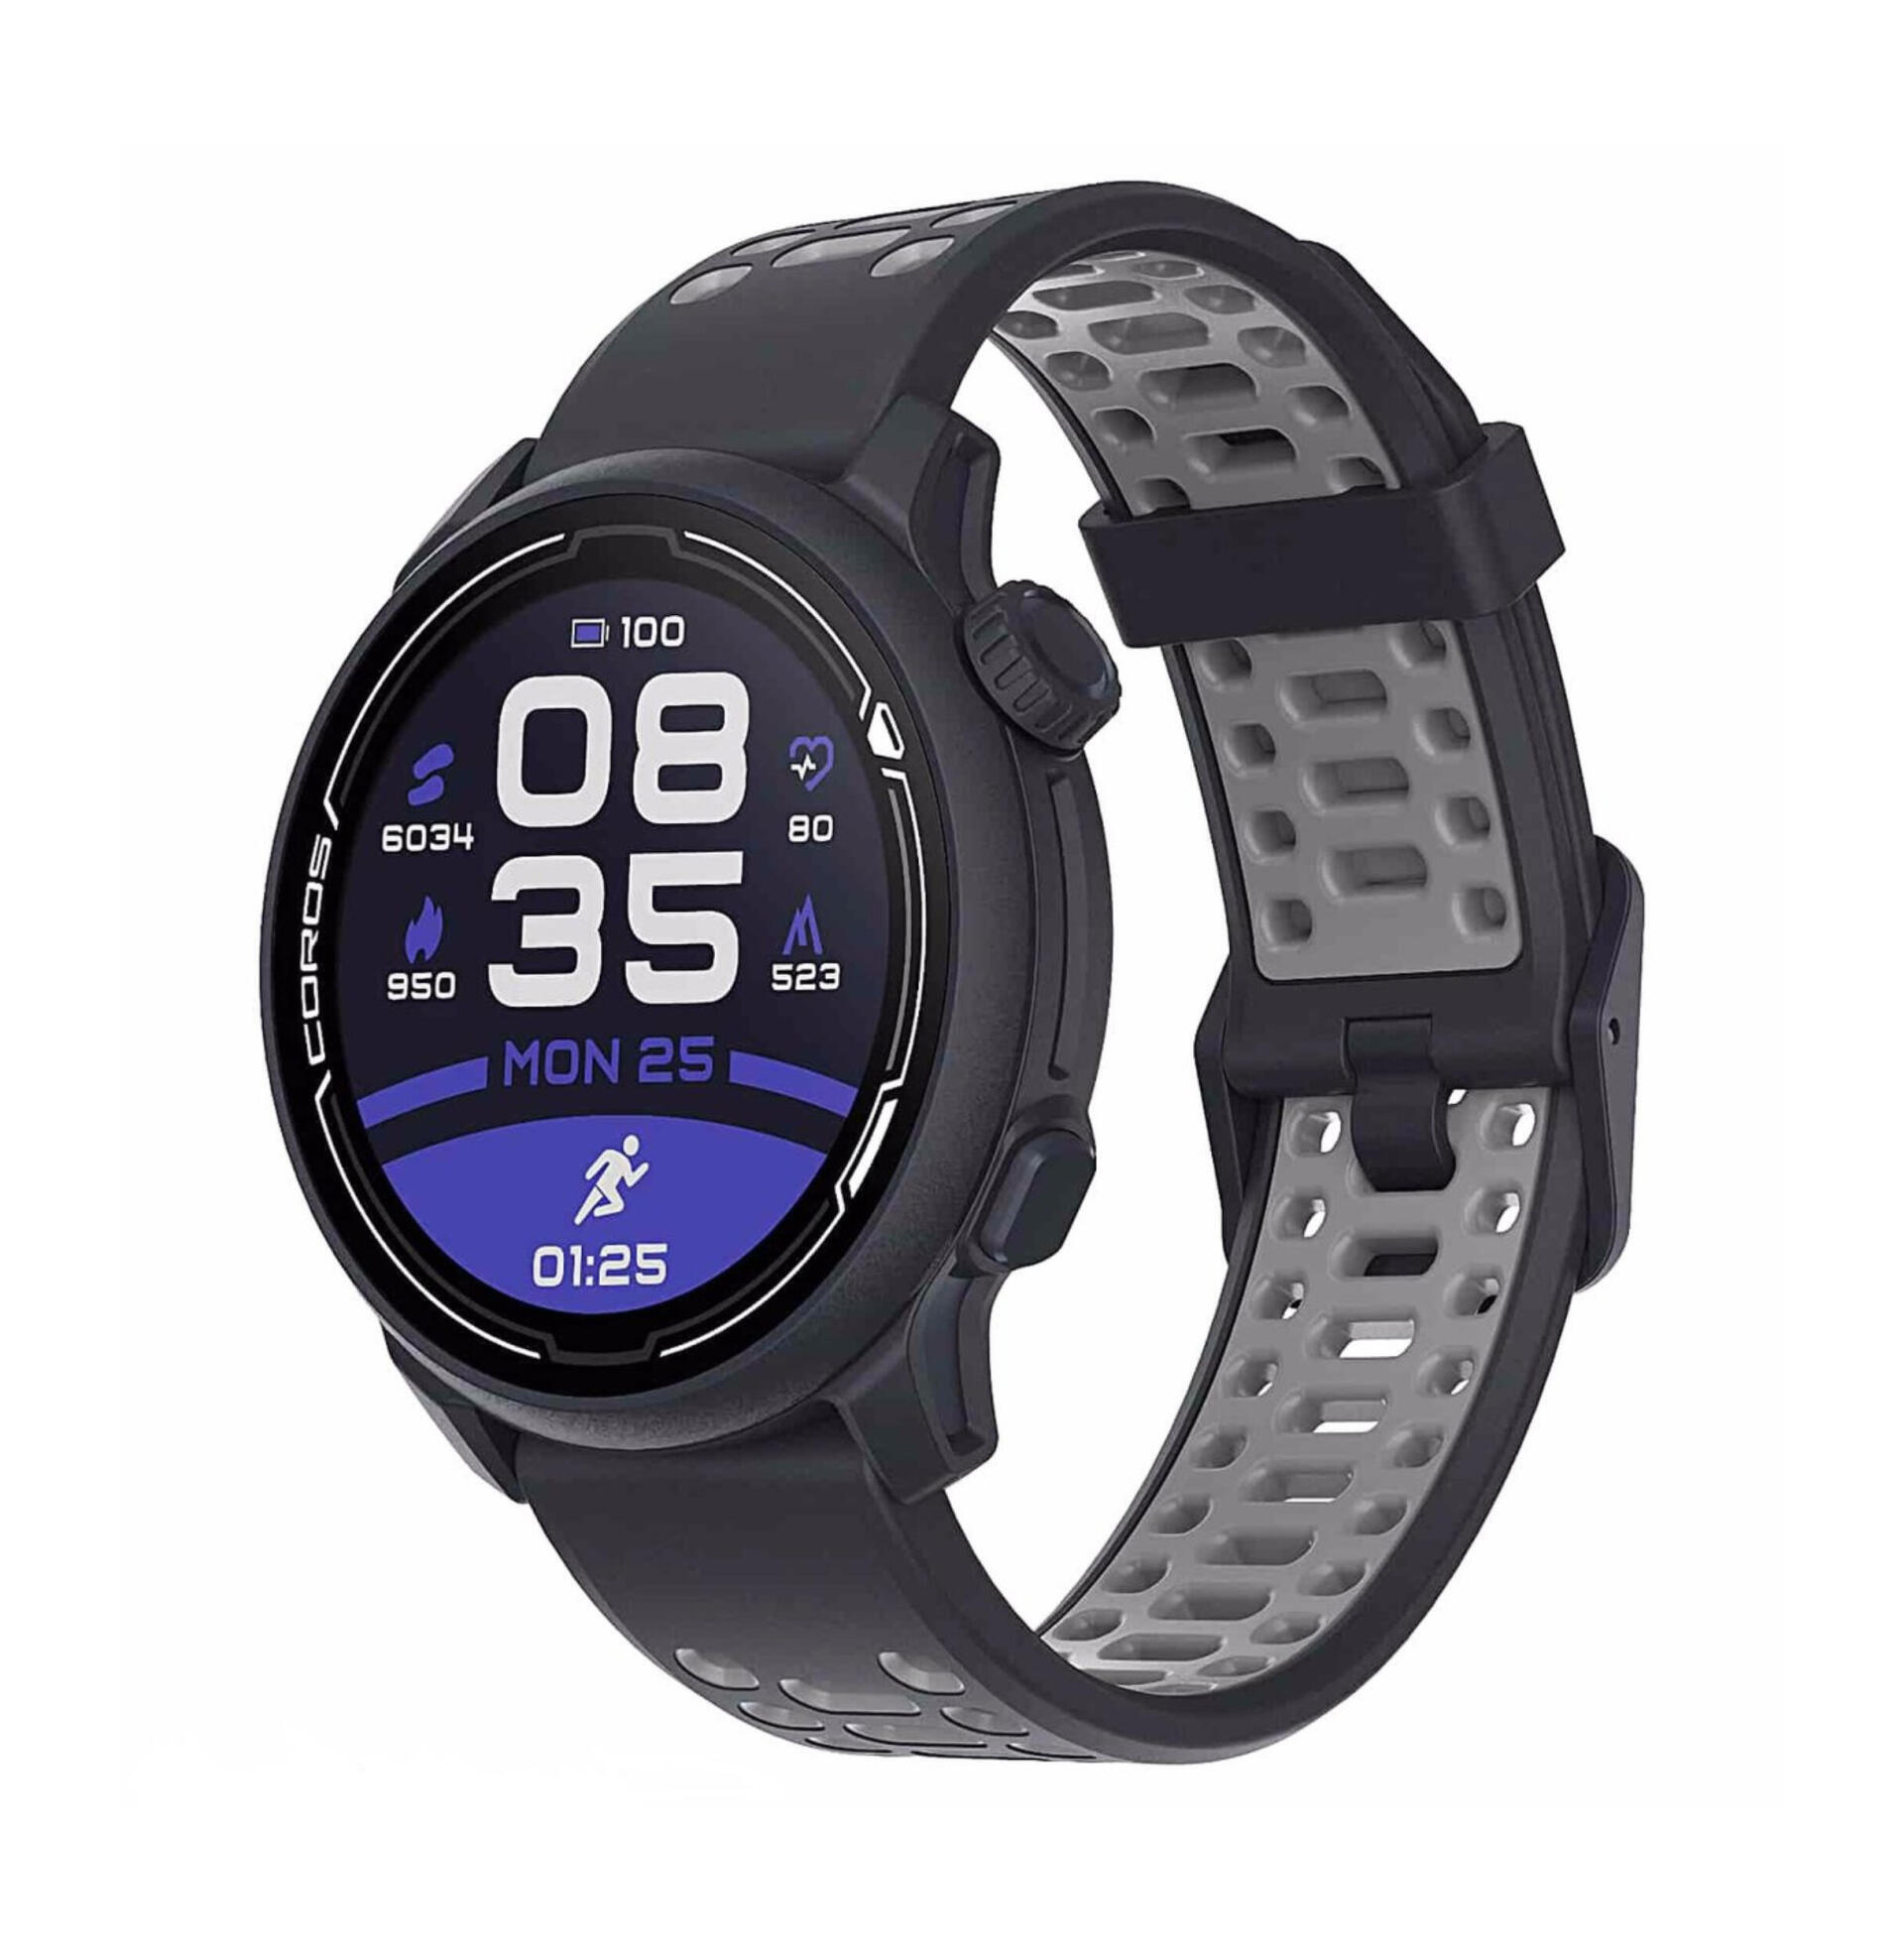 Discover Coros Award winning multisport GPS watches